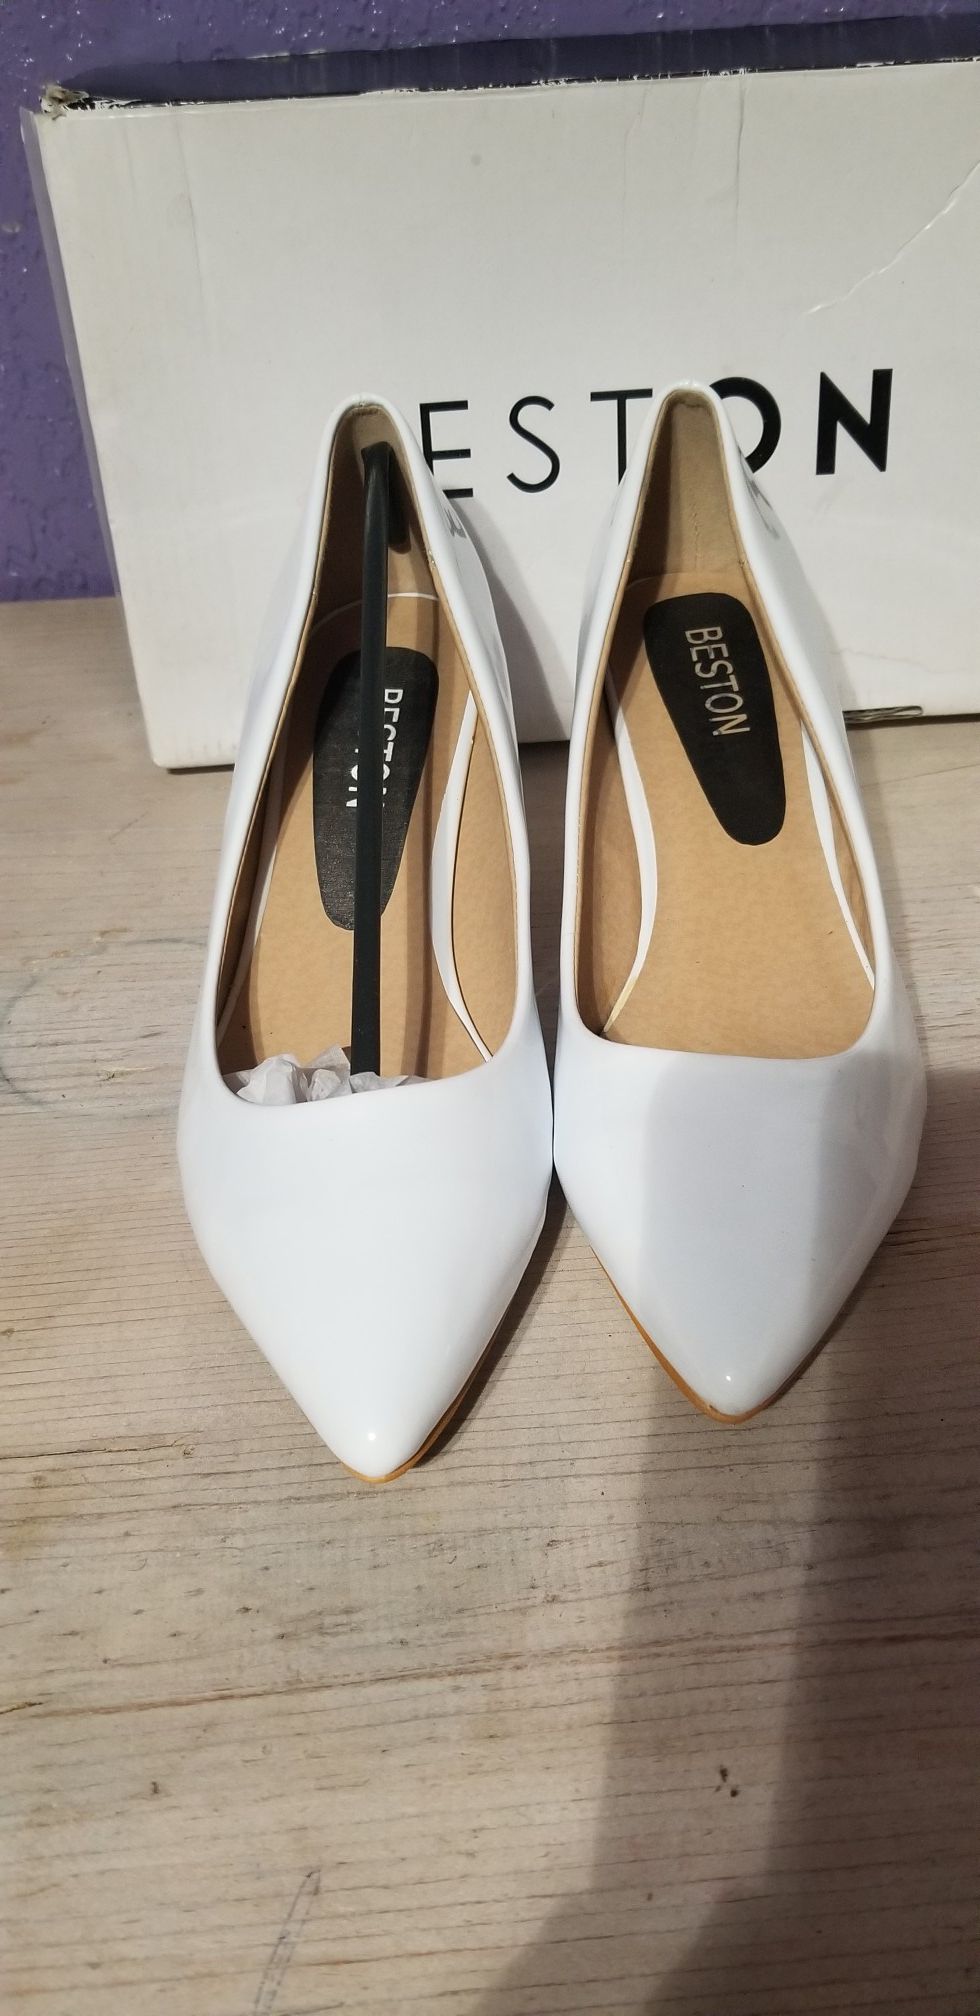 New Beston Aubree-16- FE white heels size 7